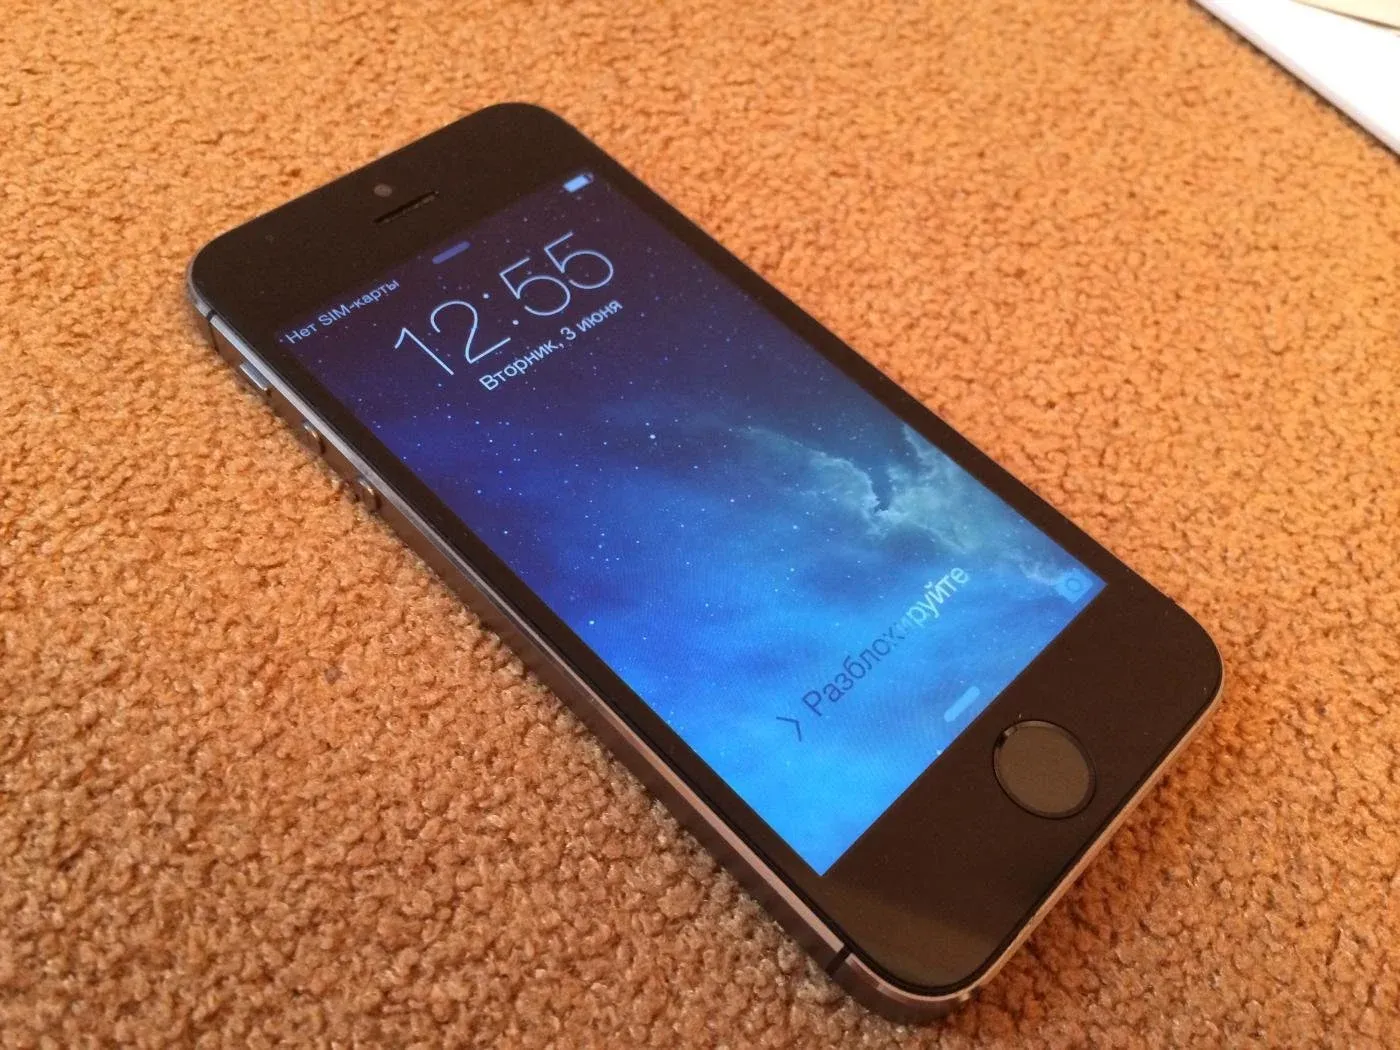 Бу телефоны купить айфон. Iphone 5s черный. Айфон 5s черный. Apple iphone 5s Space Gray. Фото 5s.